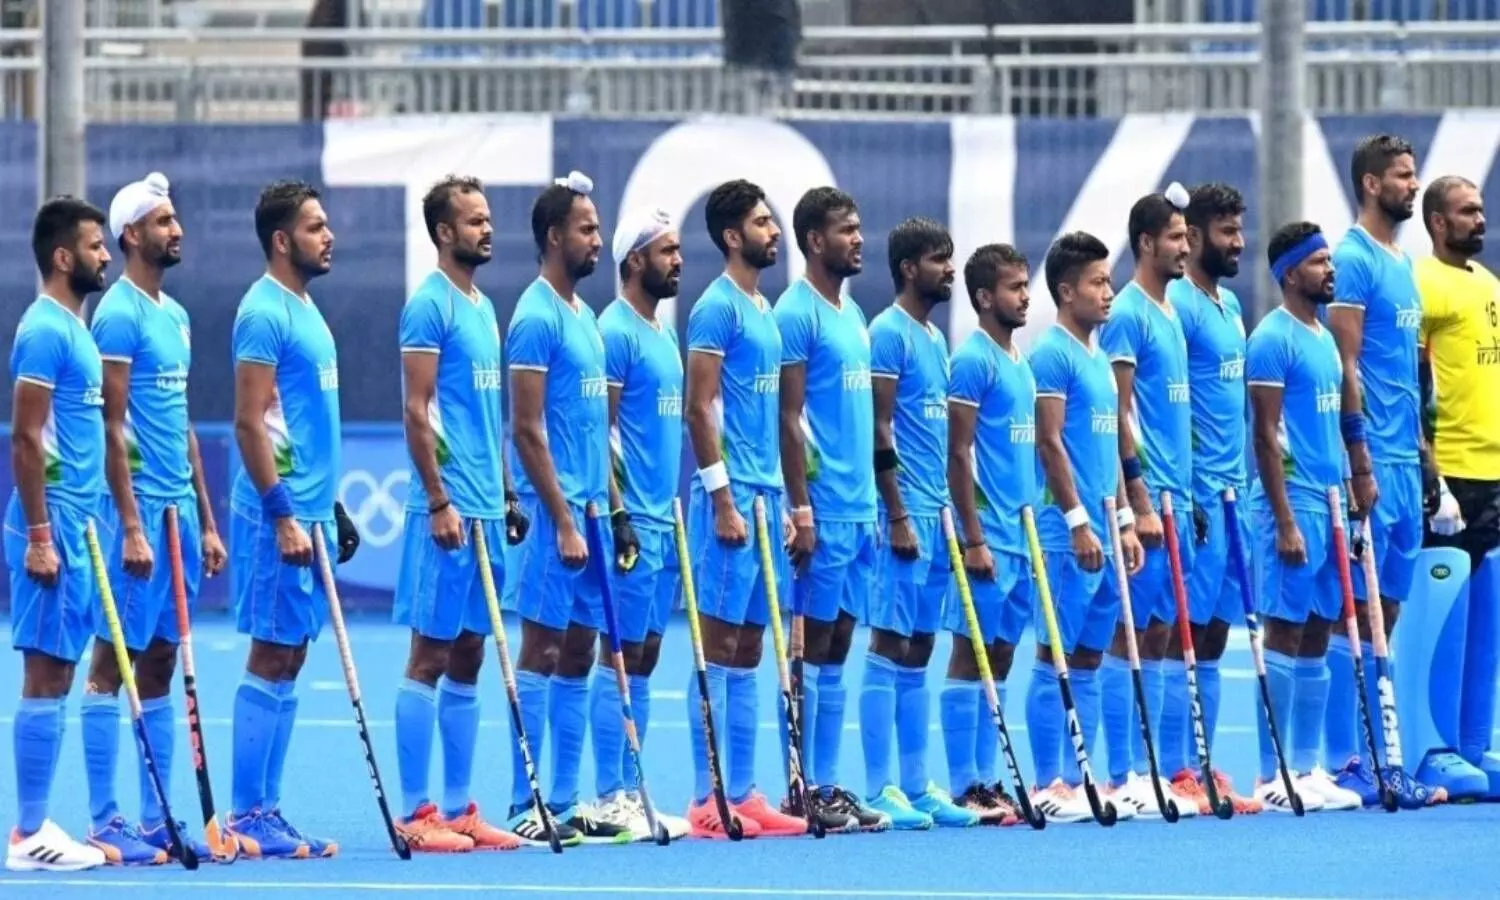 Heartbreak: India loses to Belgium in semis; all eyes set on Bronze